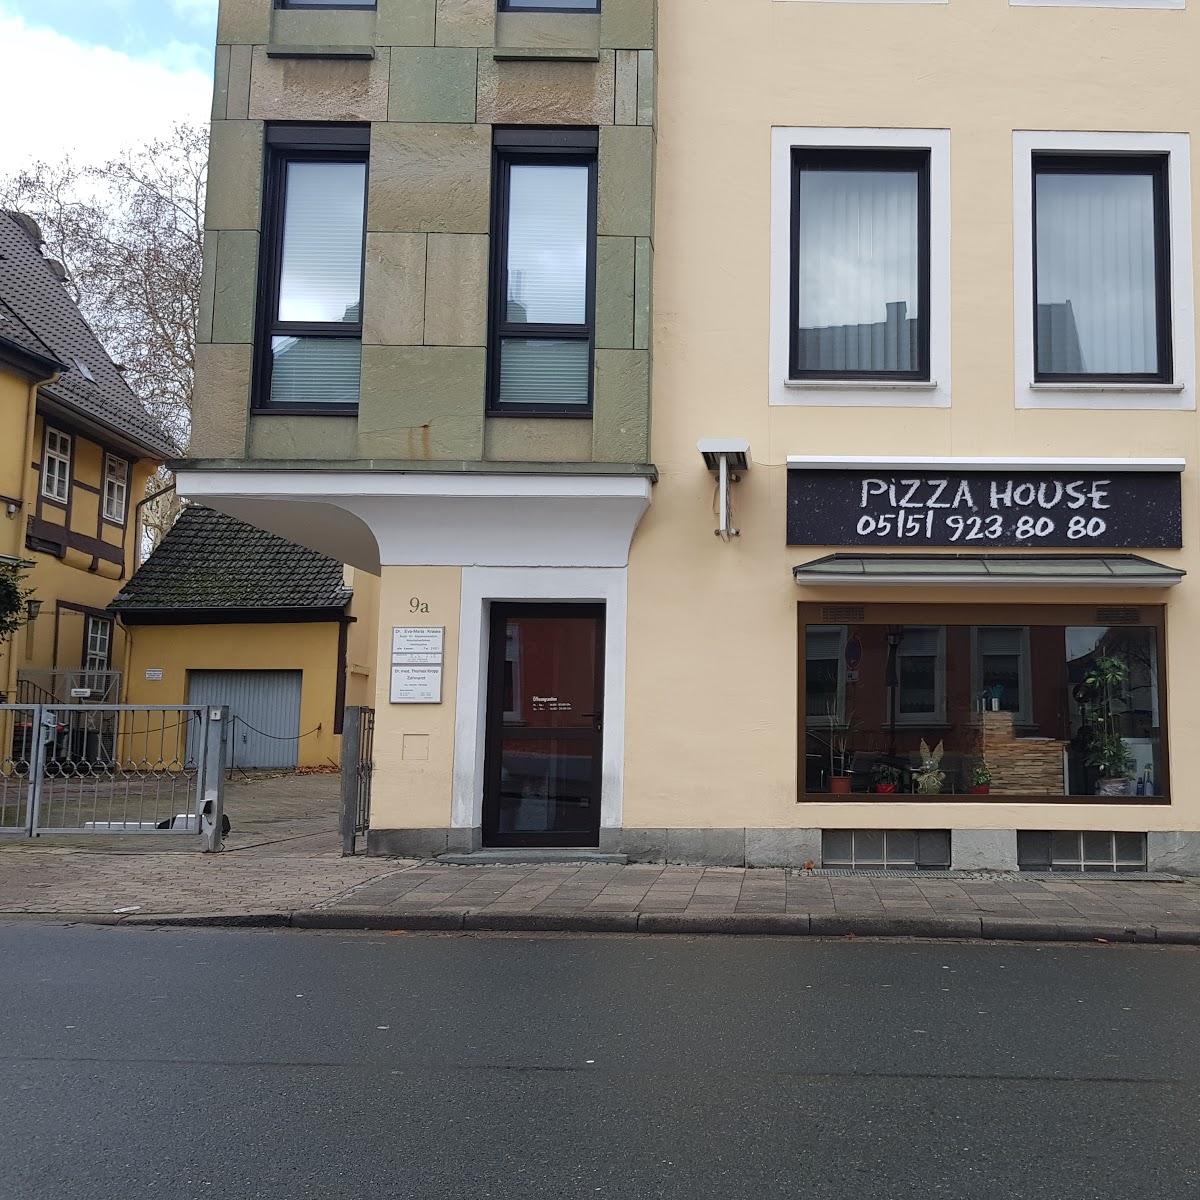 Restaurant "Pizza House" in Hameln